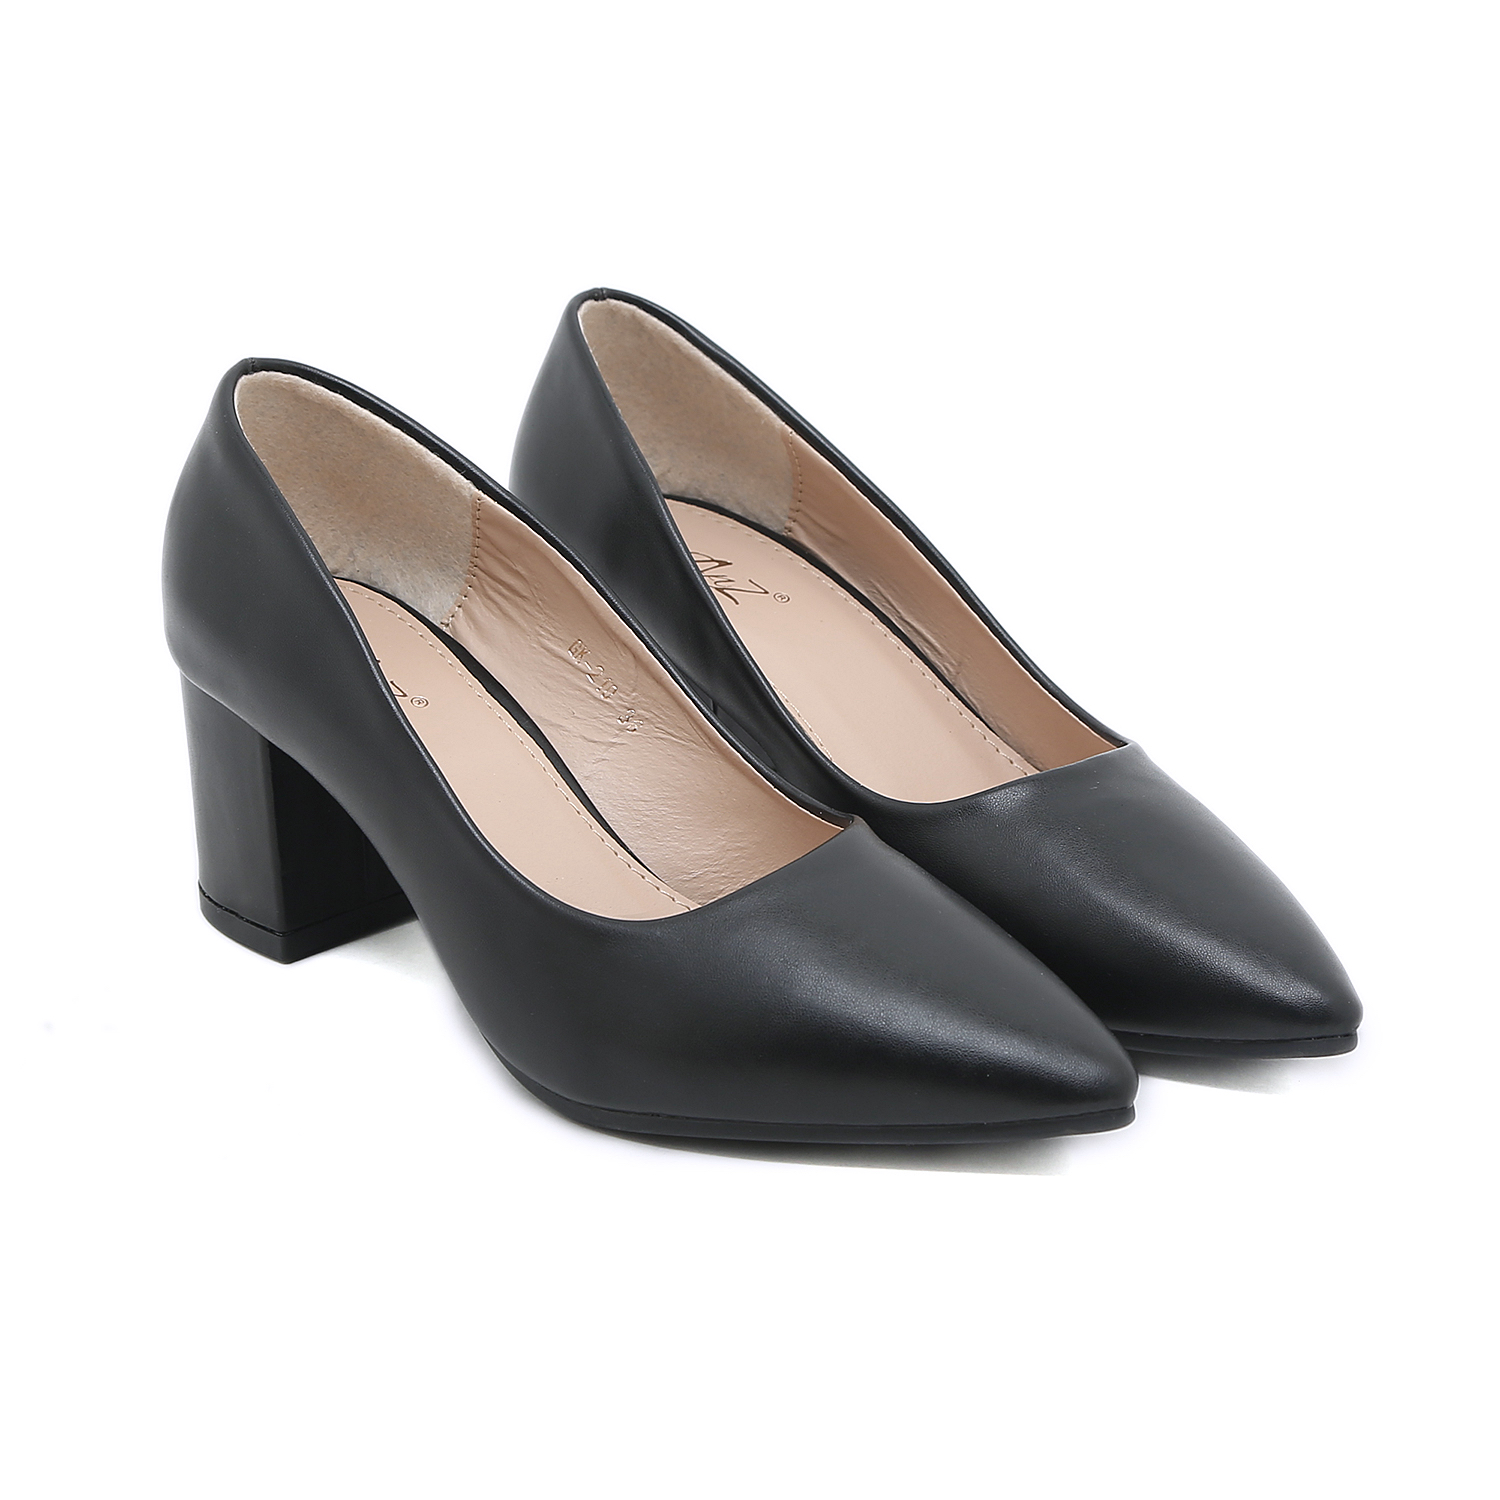 Korean suede block heels 2 inches pointed | Shopee Philippines-suu.vn